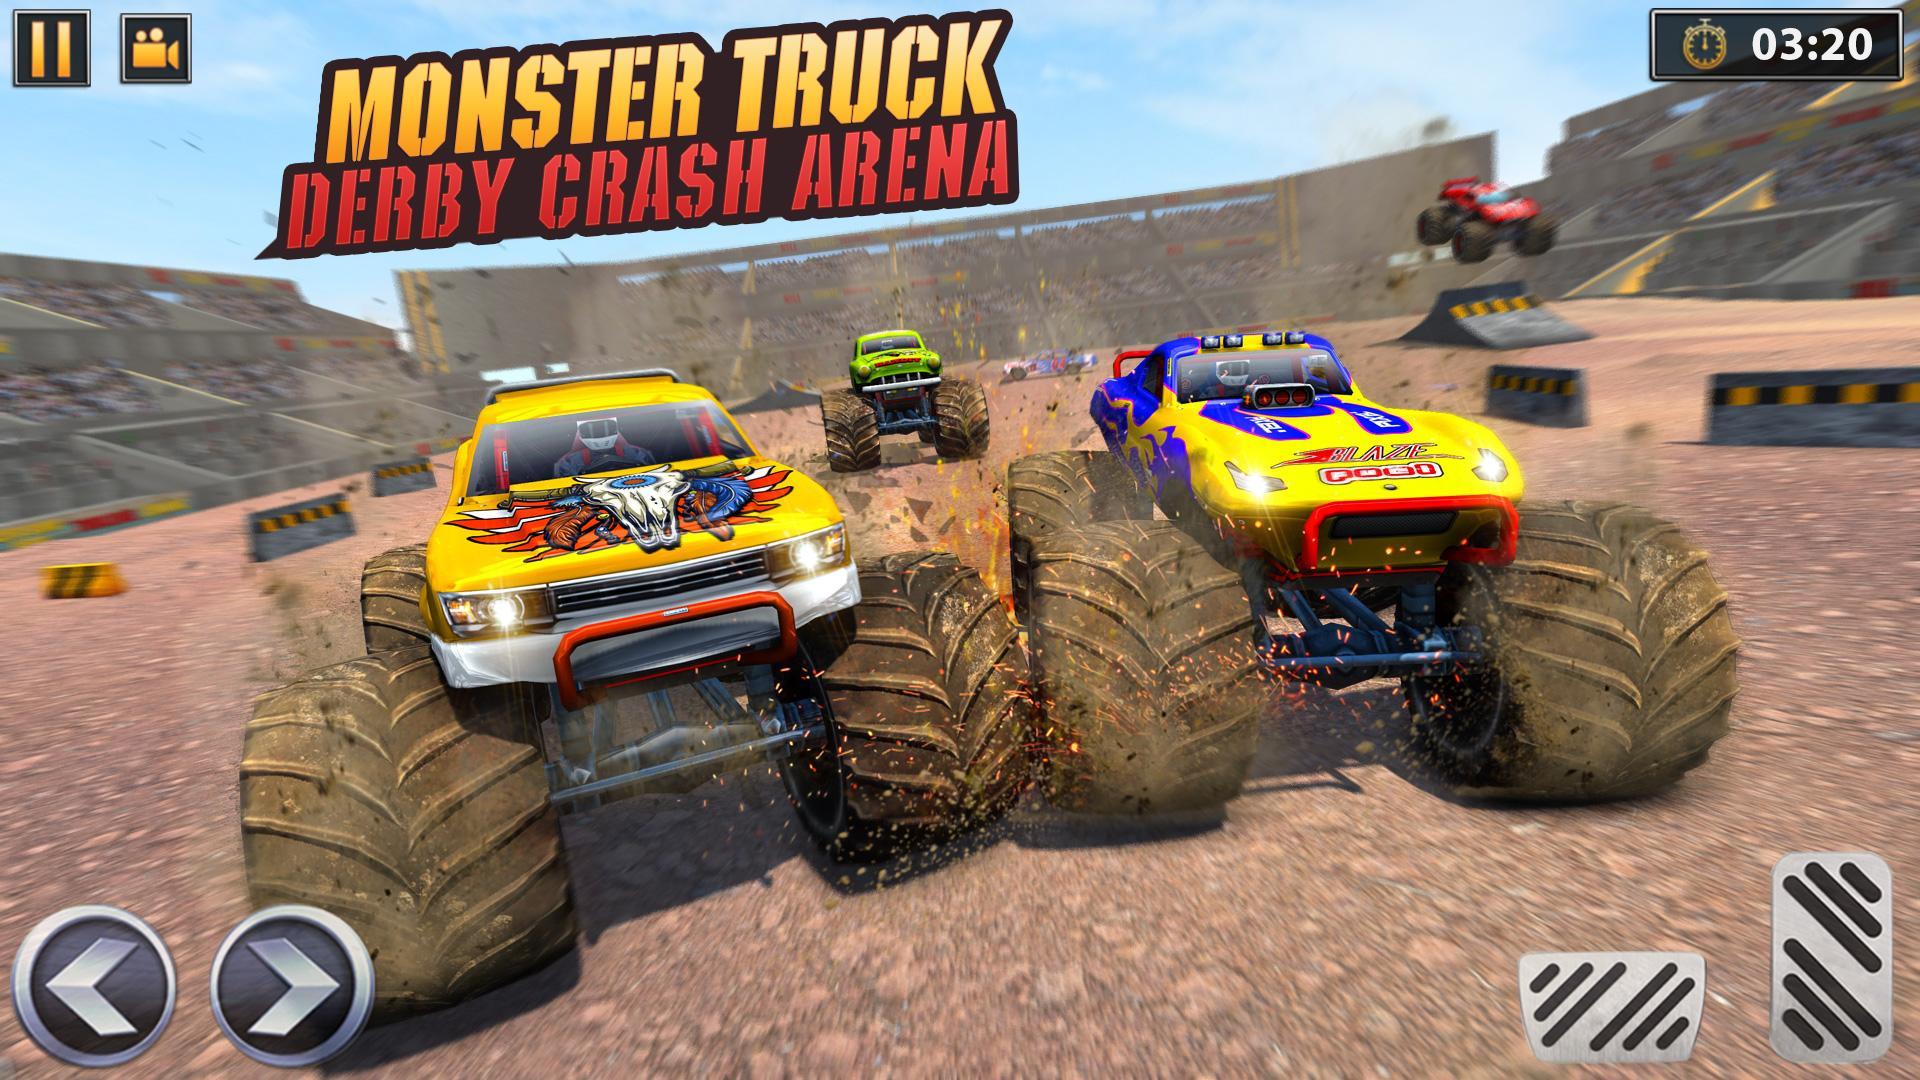 Real Monster Truck Demolition Derby Crash Stunts 3.0.3 Screenshot 11